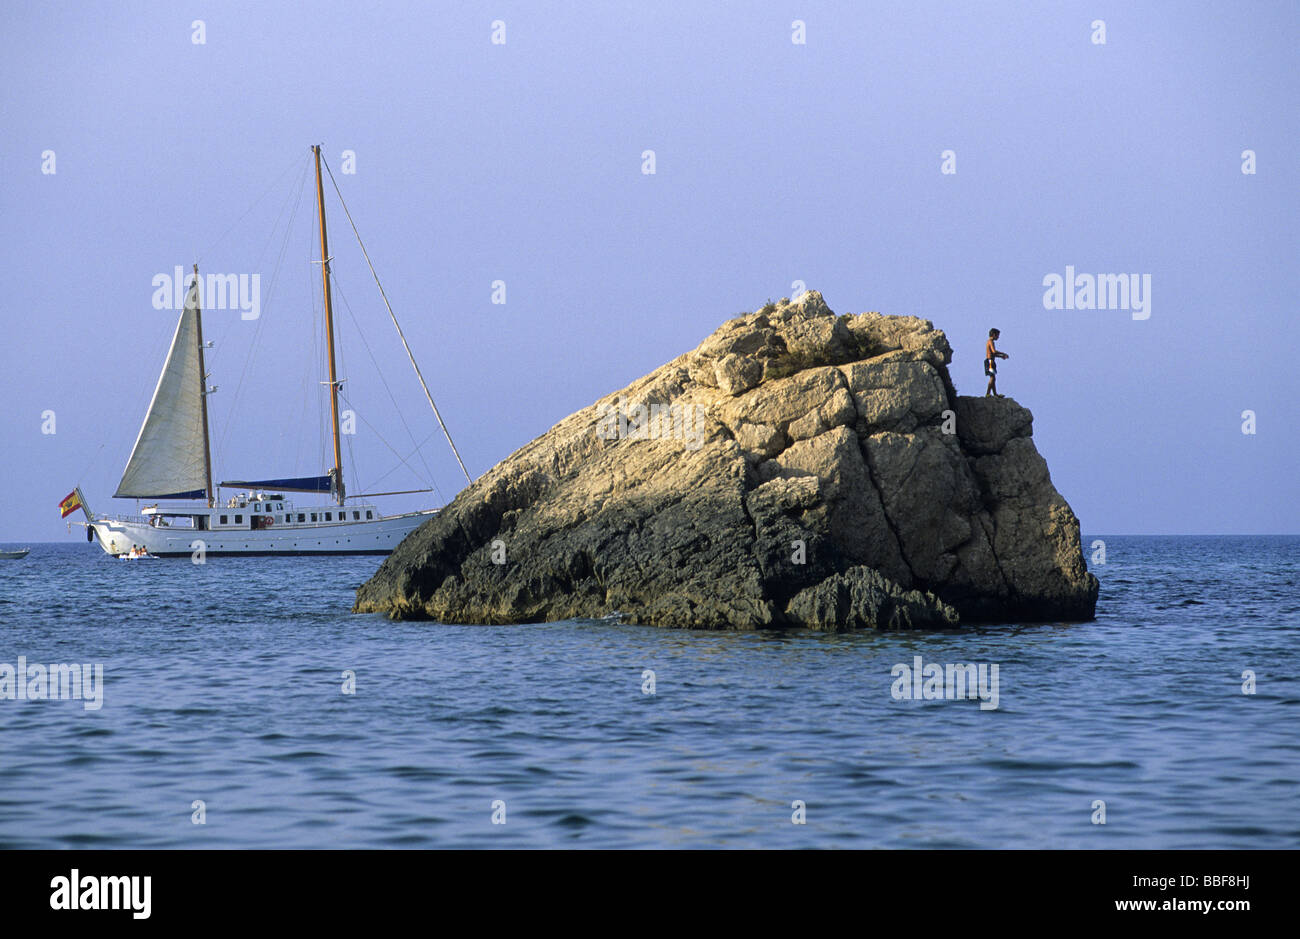 Sailboat and young boy Cala xarraca Ibiza island Balearic islands Spain Stock Photo